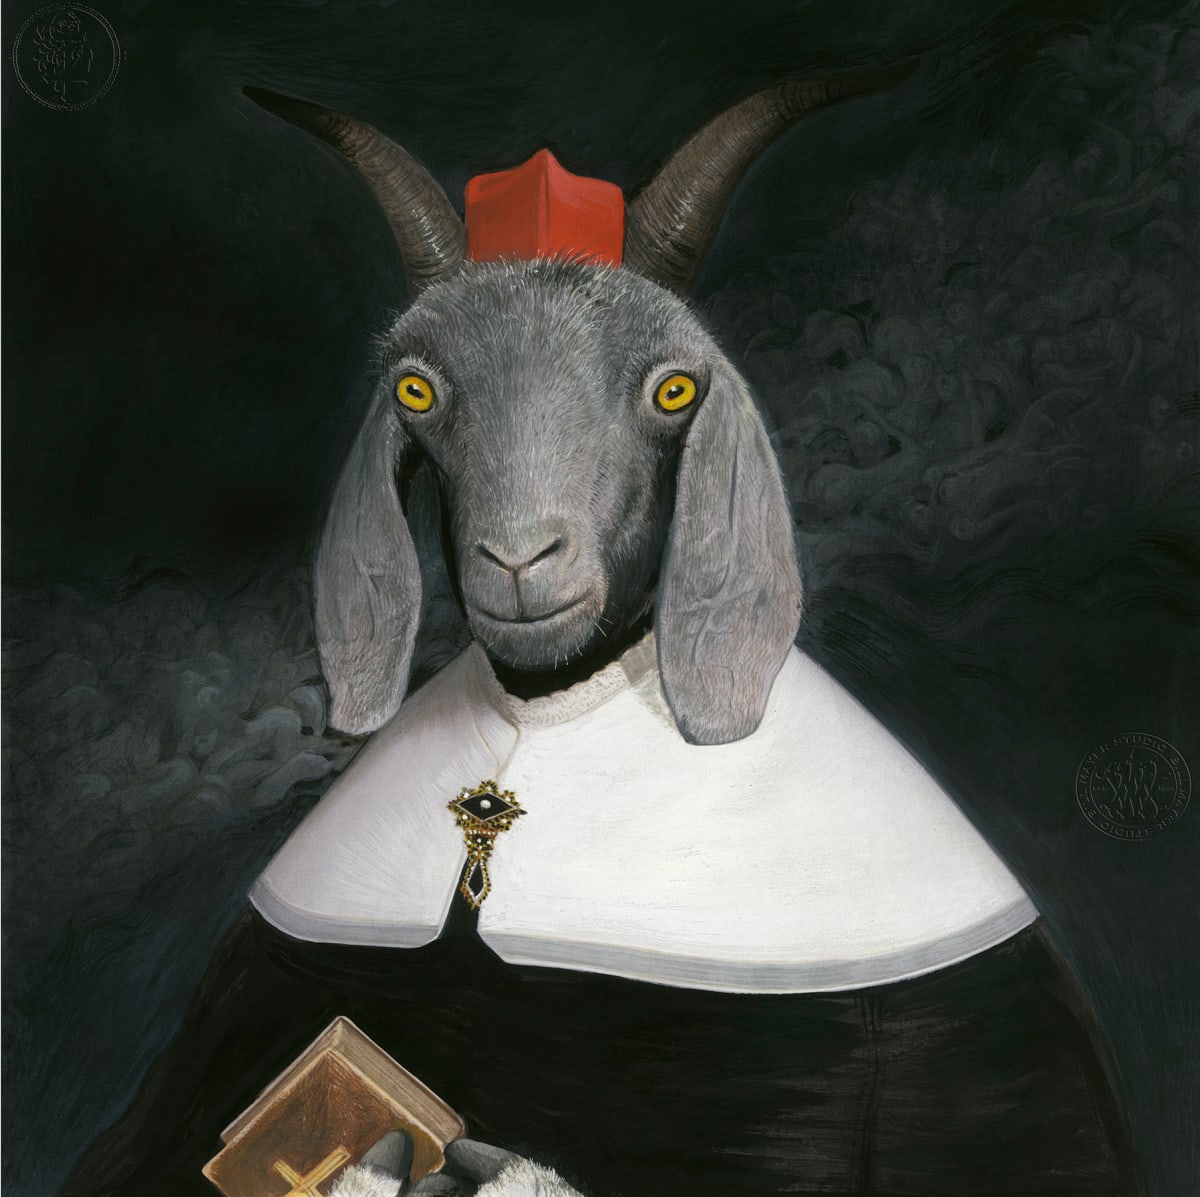 El Cabro Beata (The Pious Goat) by Bill Mayer 